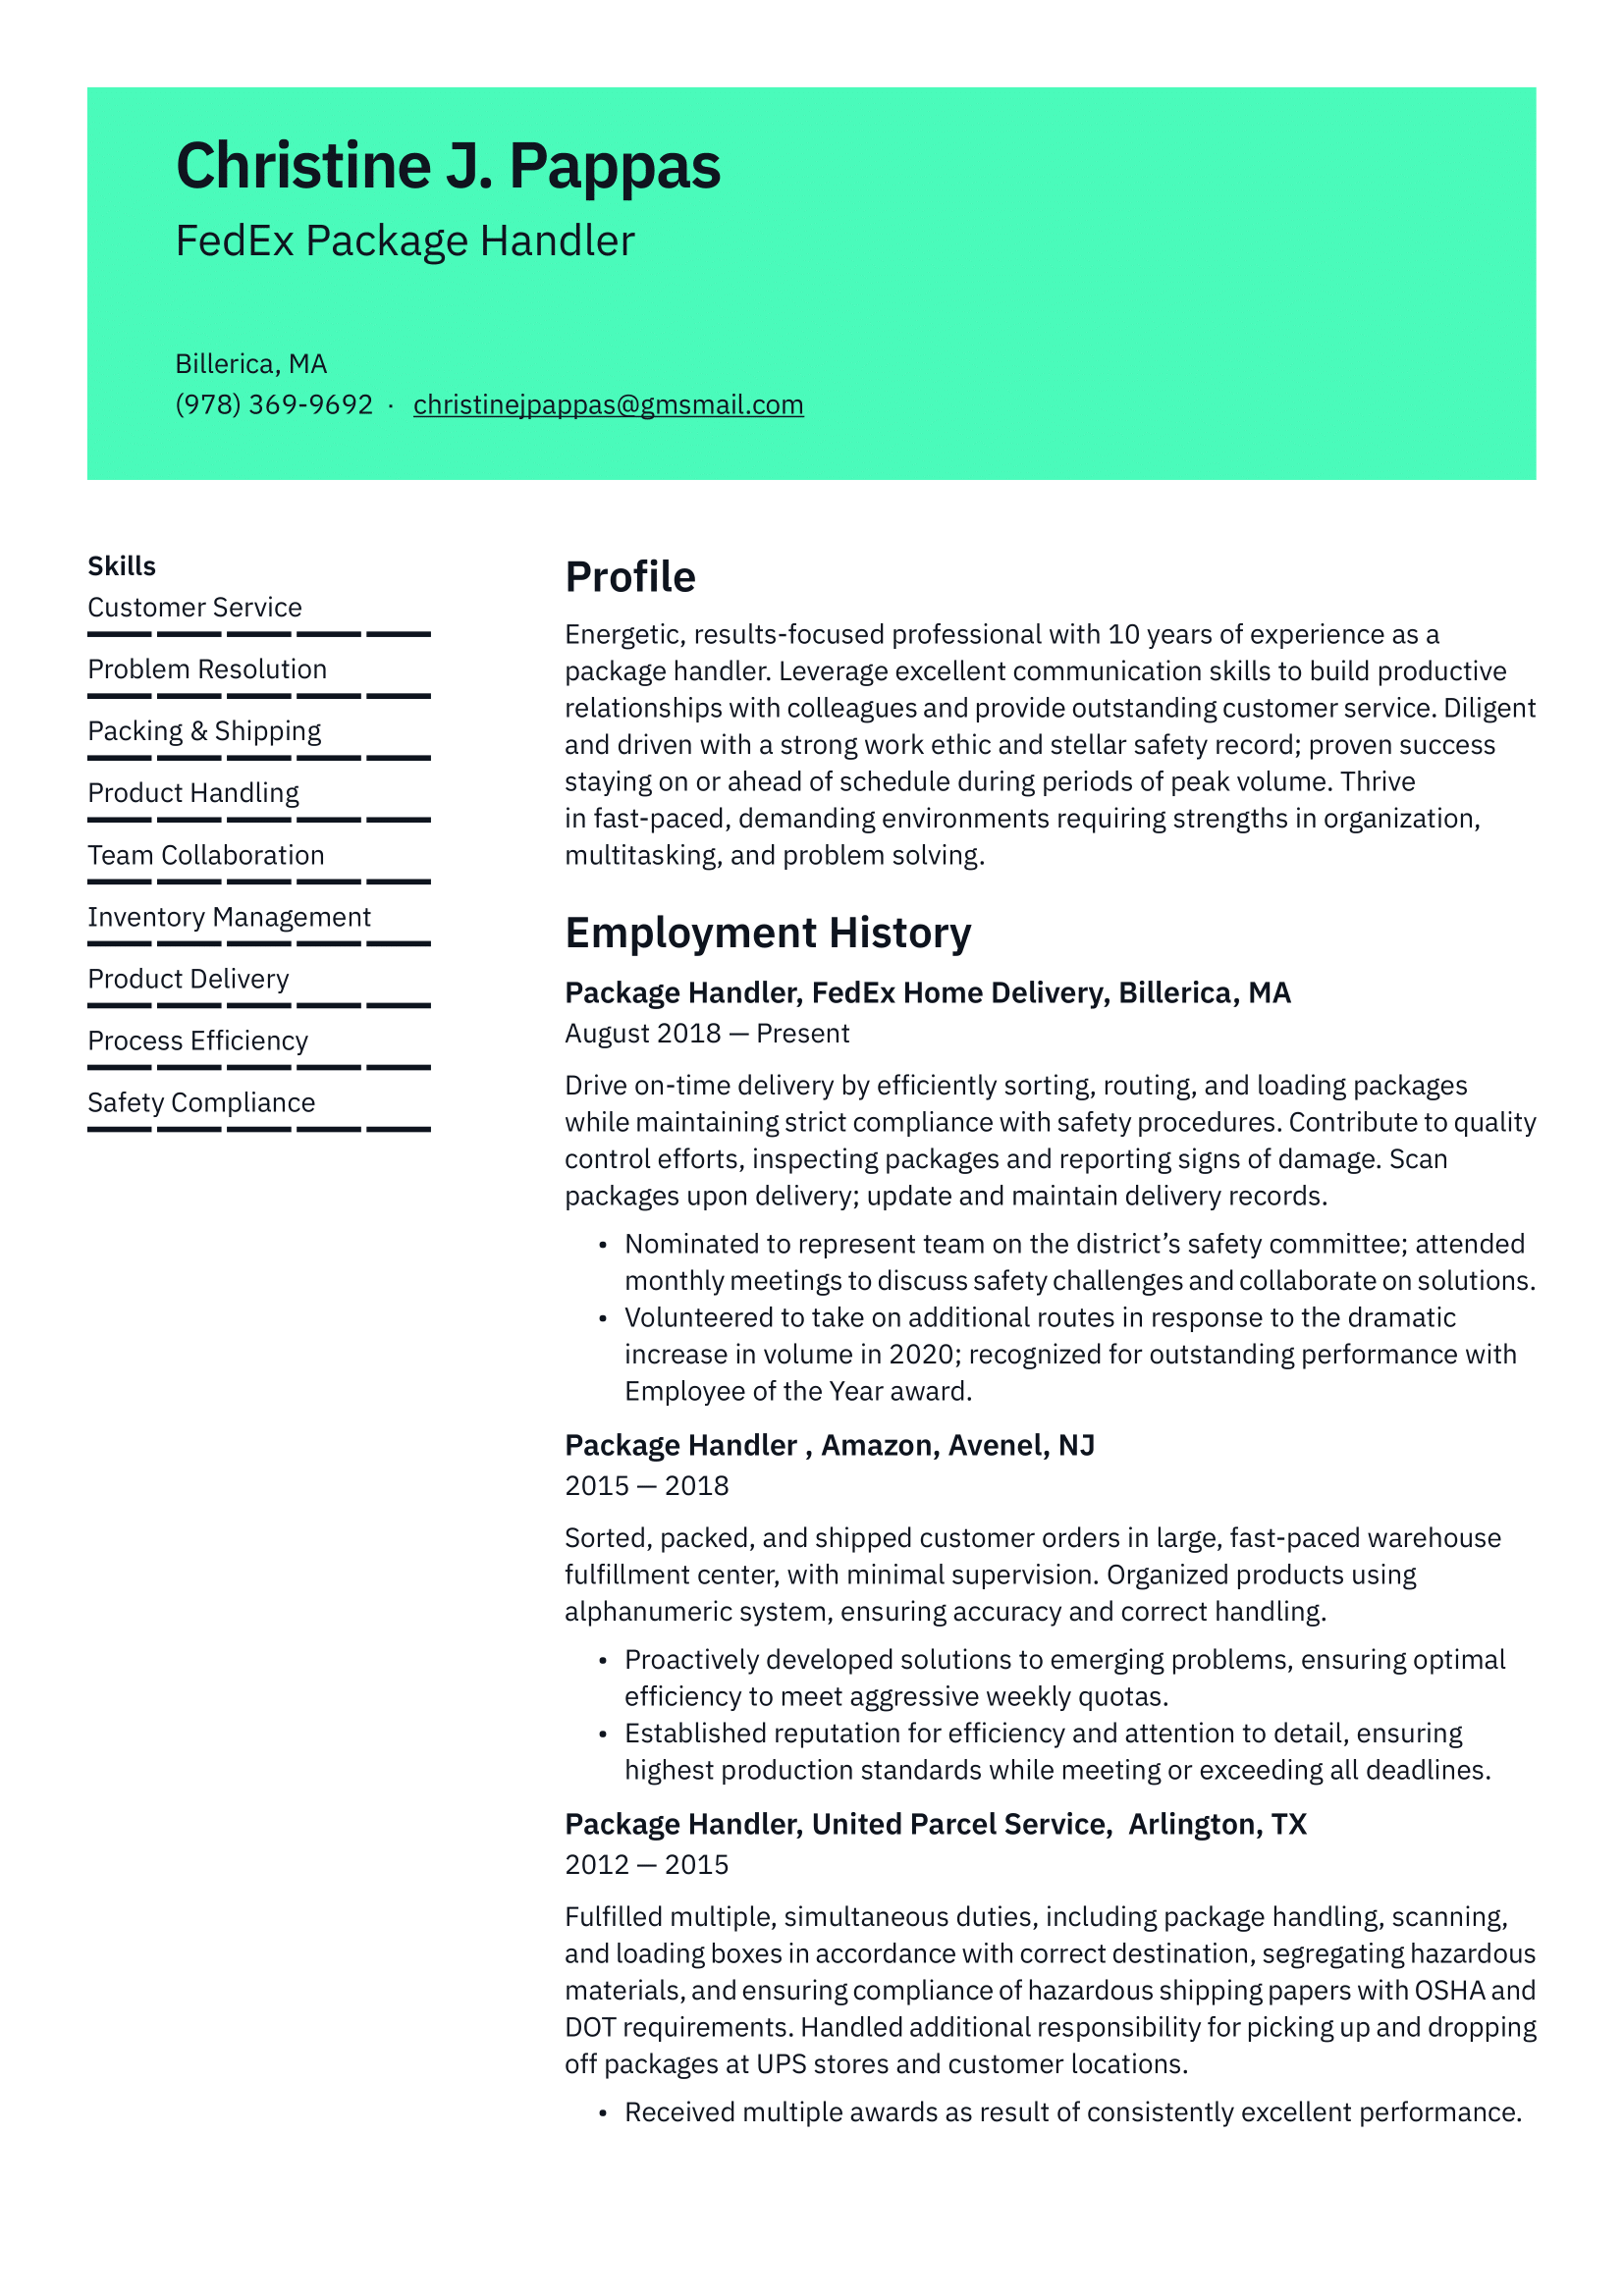 Fedex-Resume-Example.png